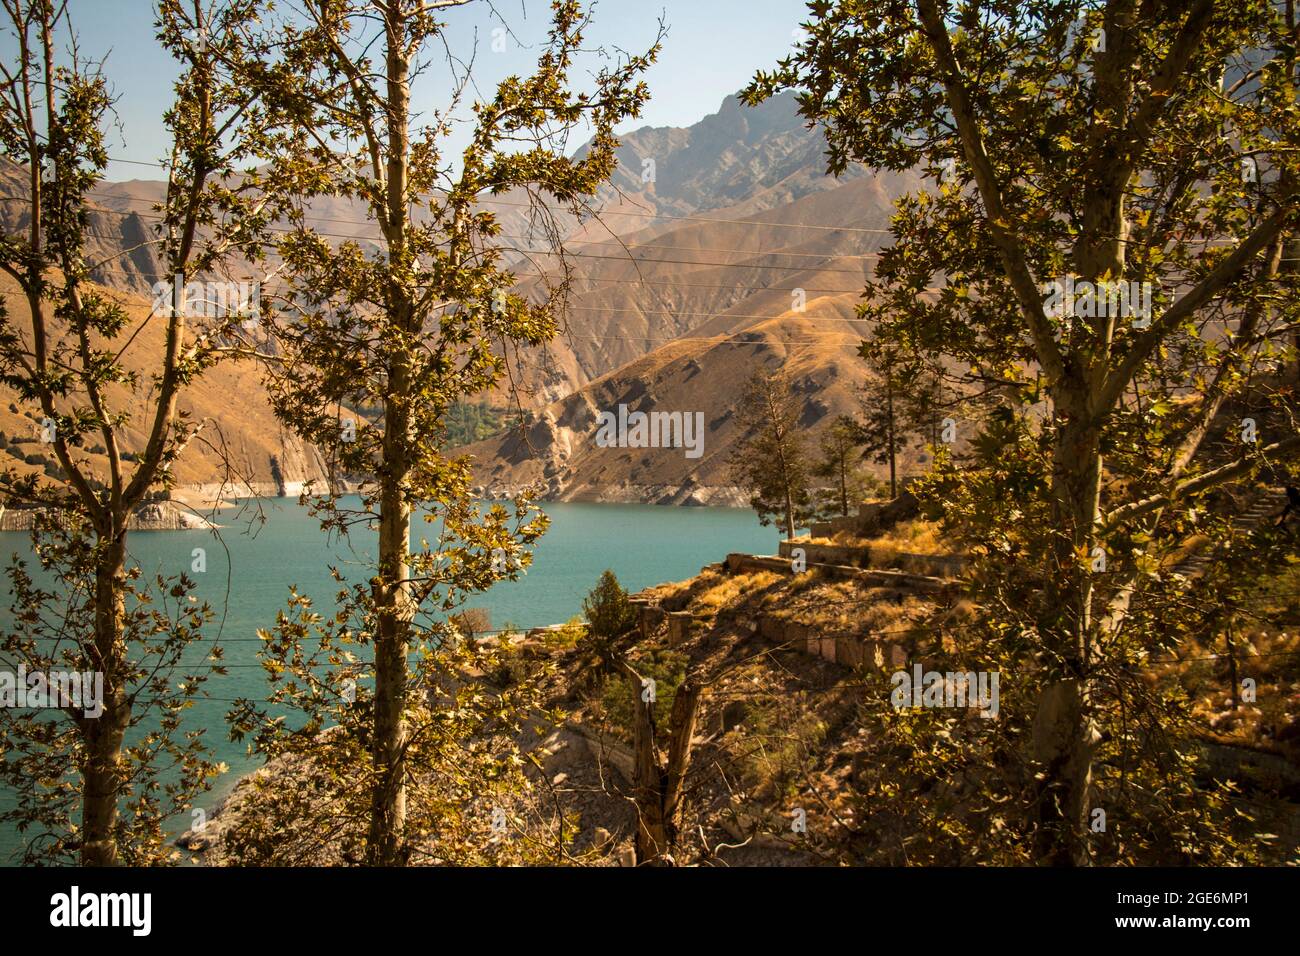 A beautiful view of Karaj Dam on Chalous Road Stock Photo